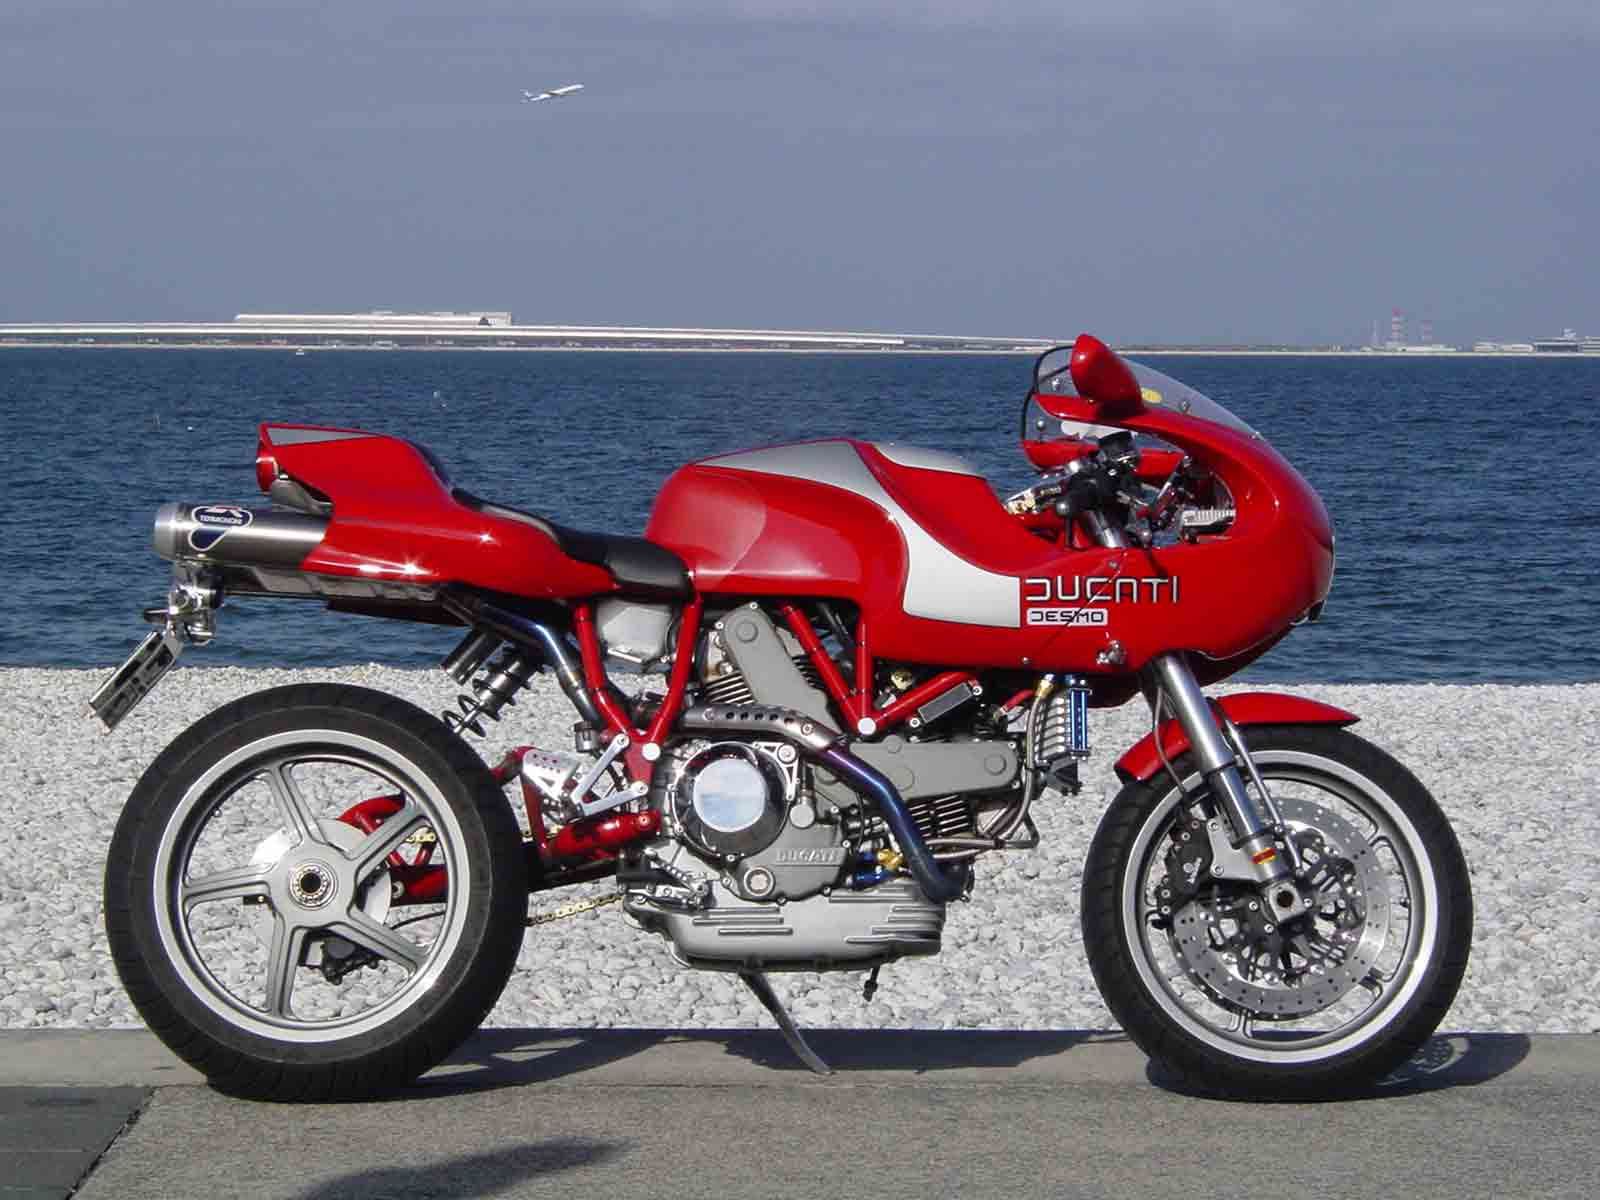 The 2001 Ducati MH900e